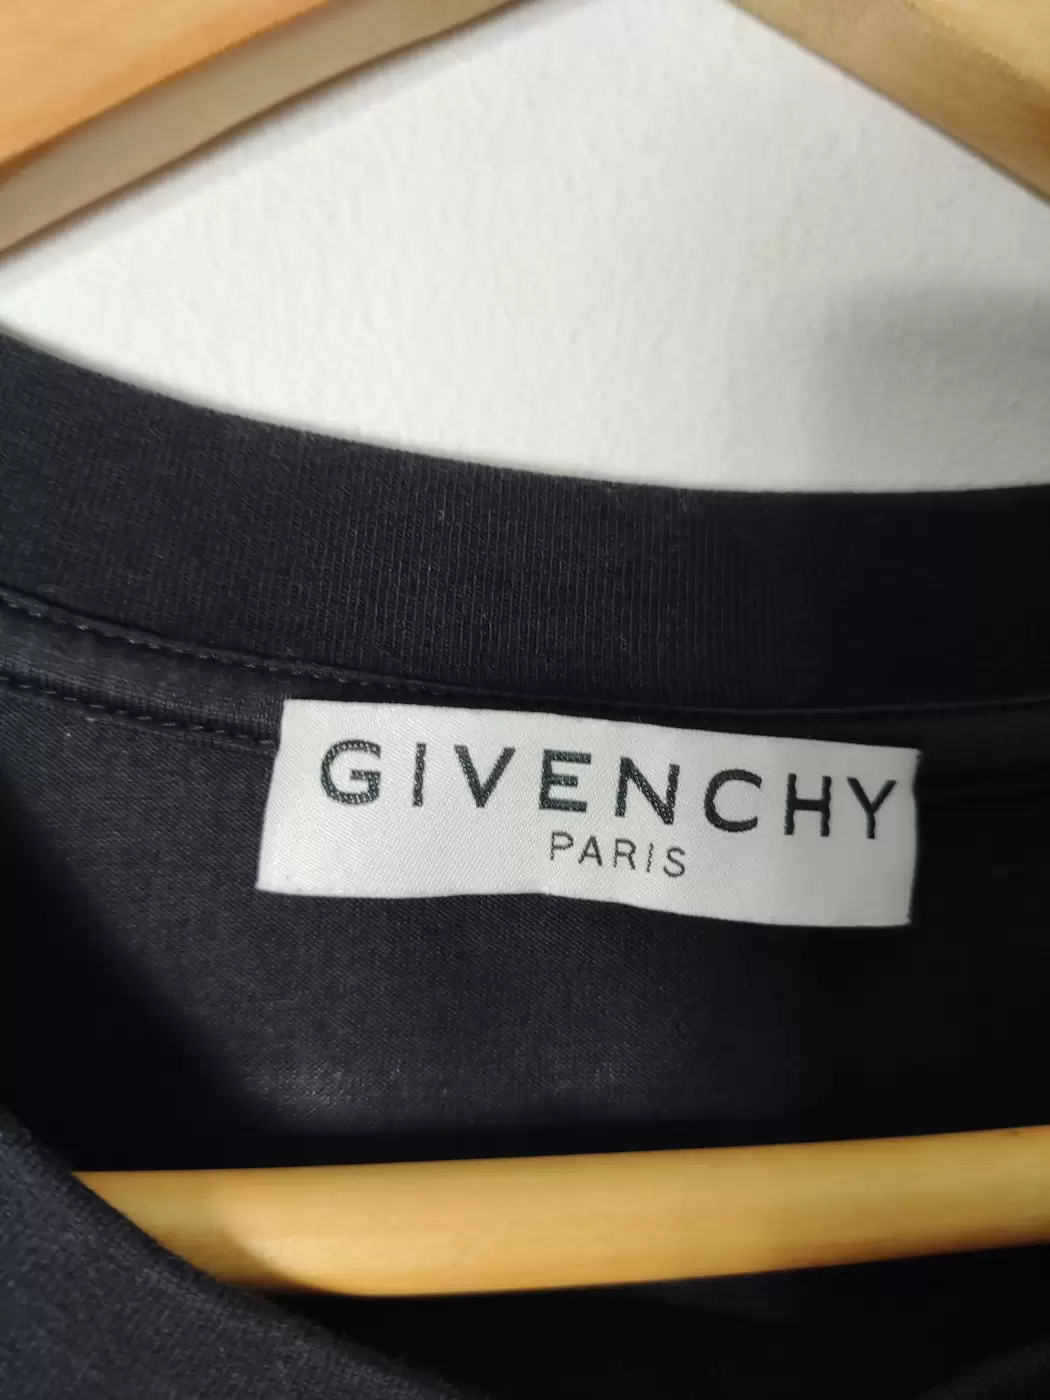 38859 - Givenchy Shark Print Tee | Item Details - AfterMarket